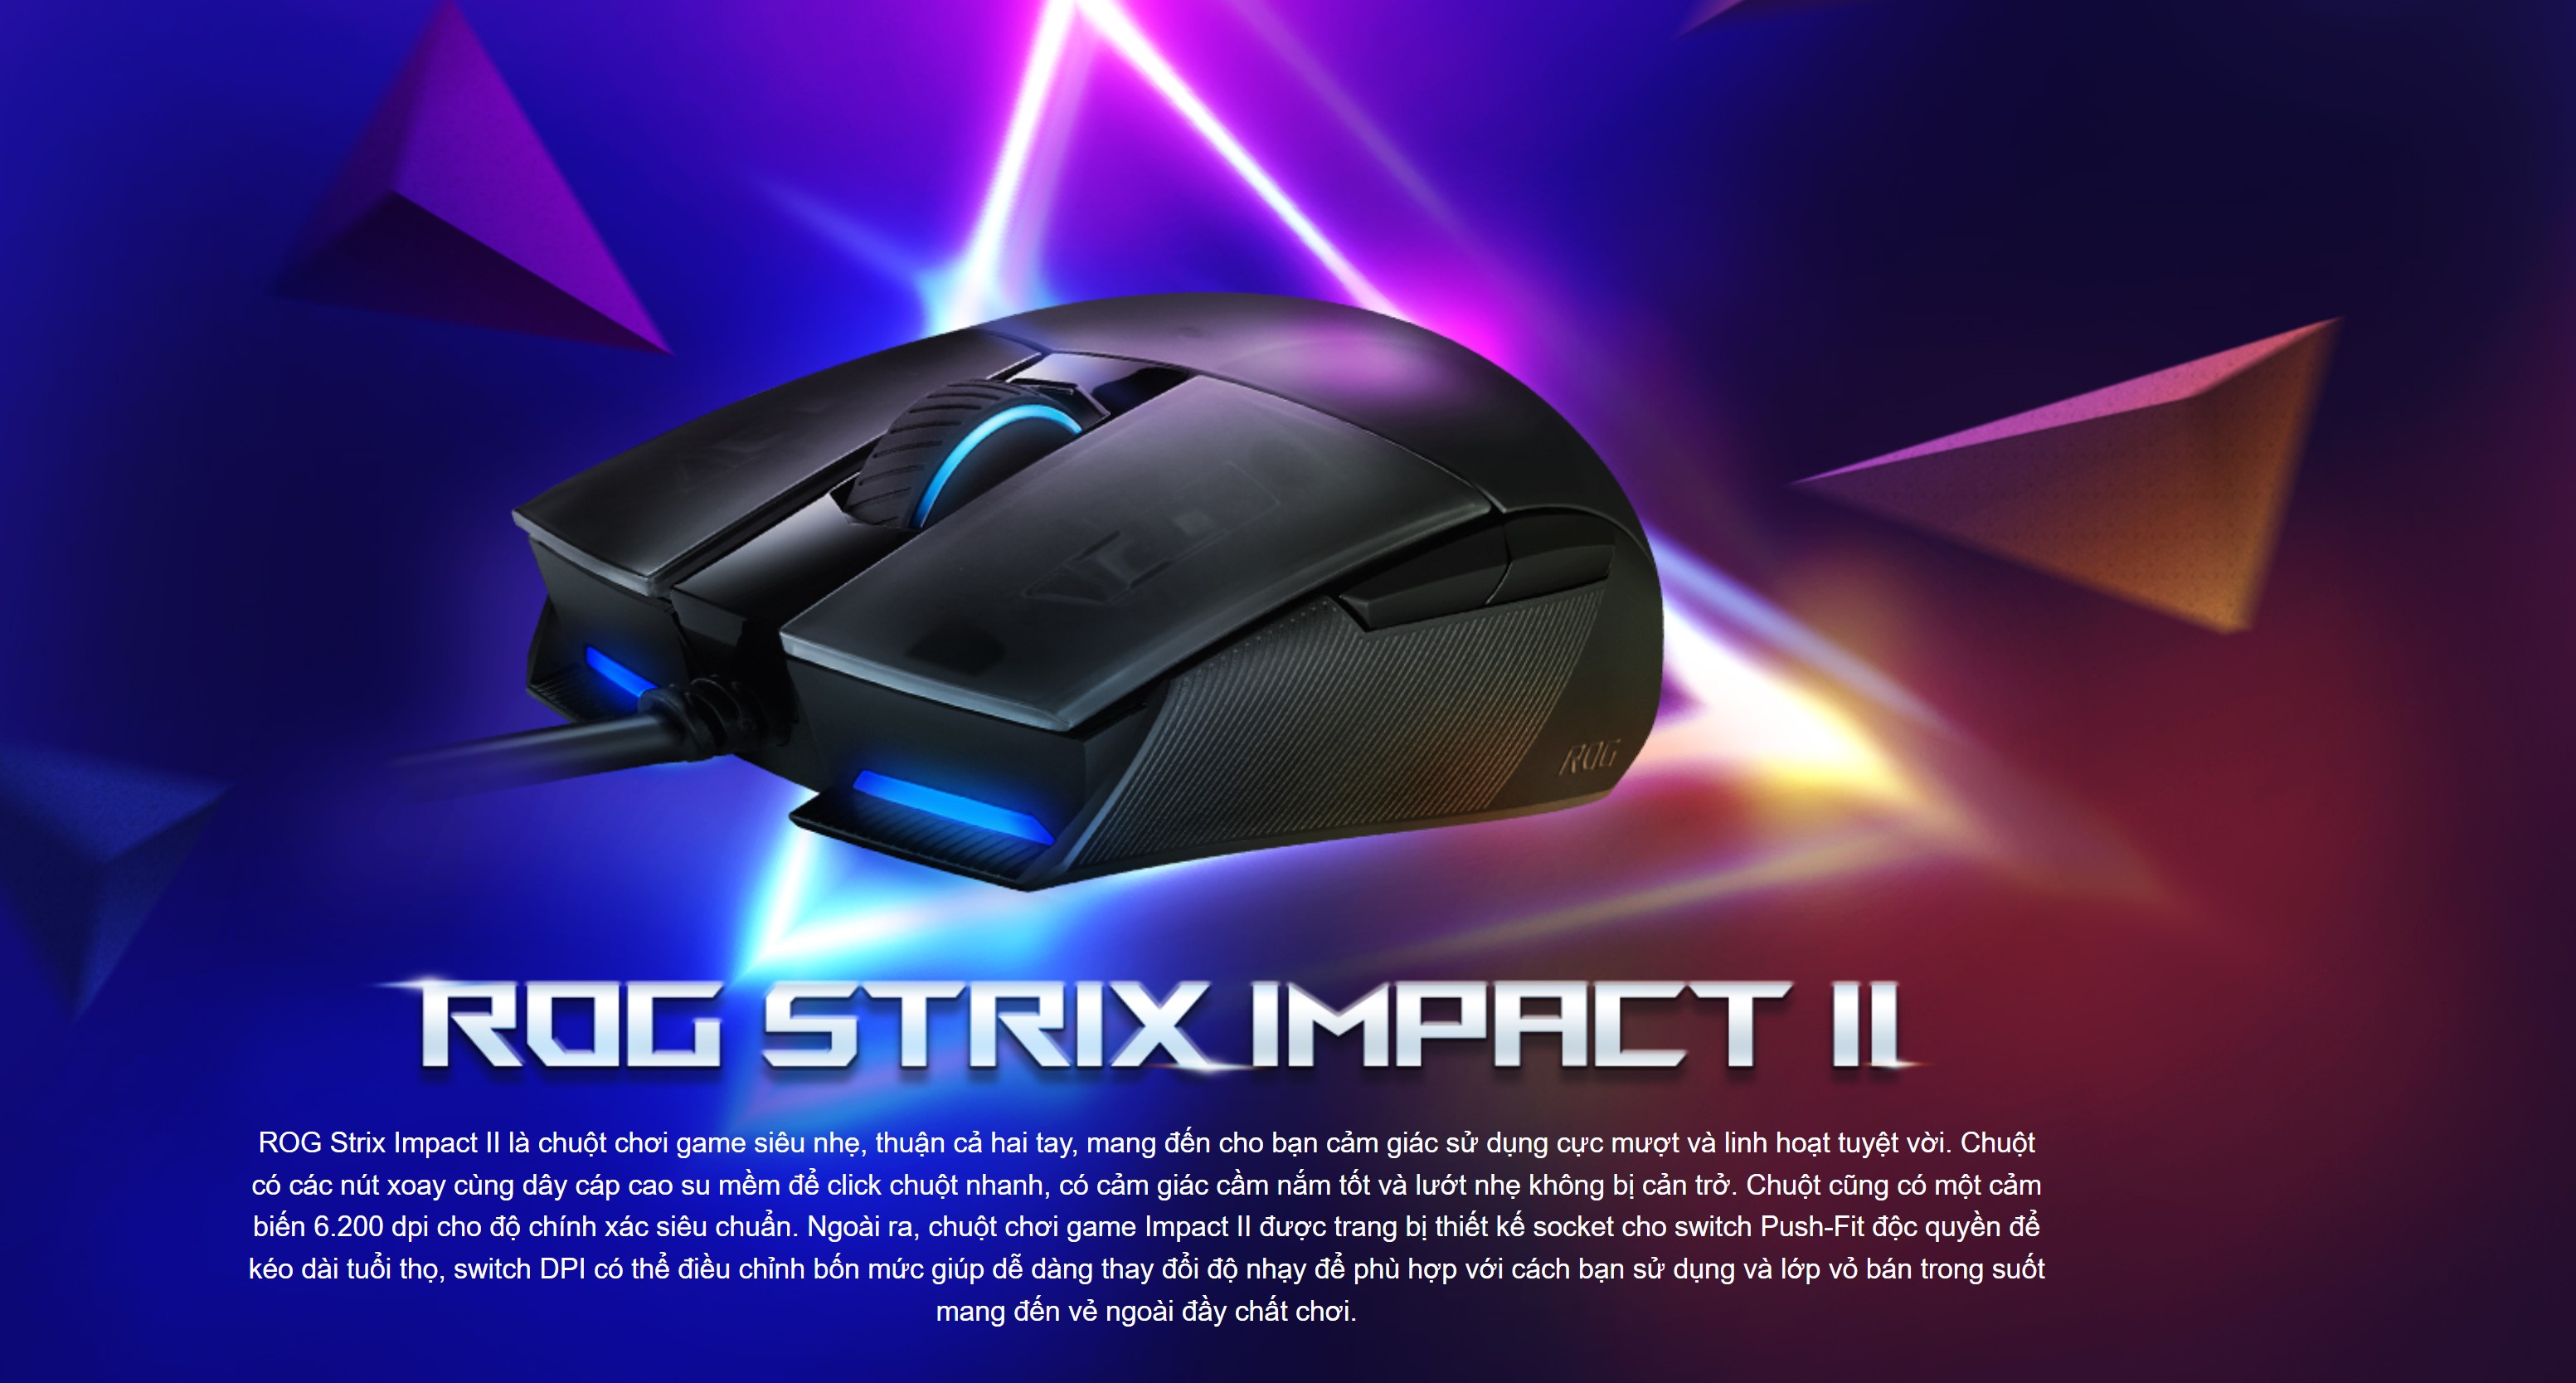 Rog strix impact. ASUS ROG Strix Impact. ASUS ROG Strix Mouse. ASUS ROG Strix Impact III. Программа для мышки ASUS ROG Strix Impact 2.